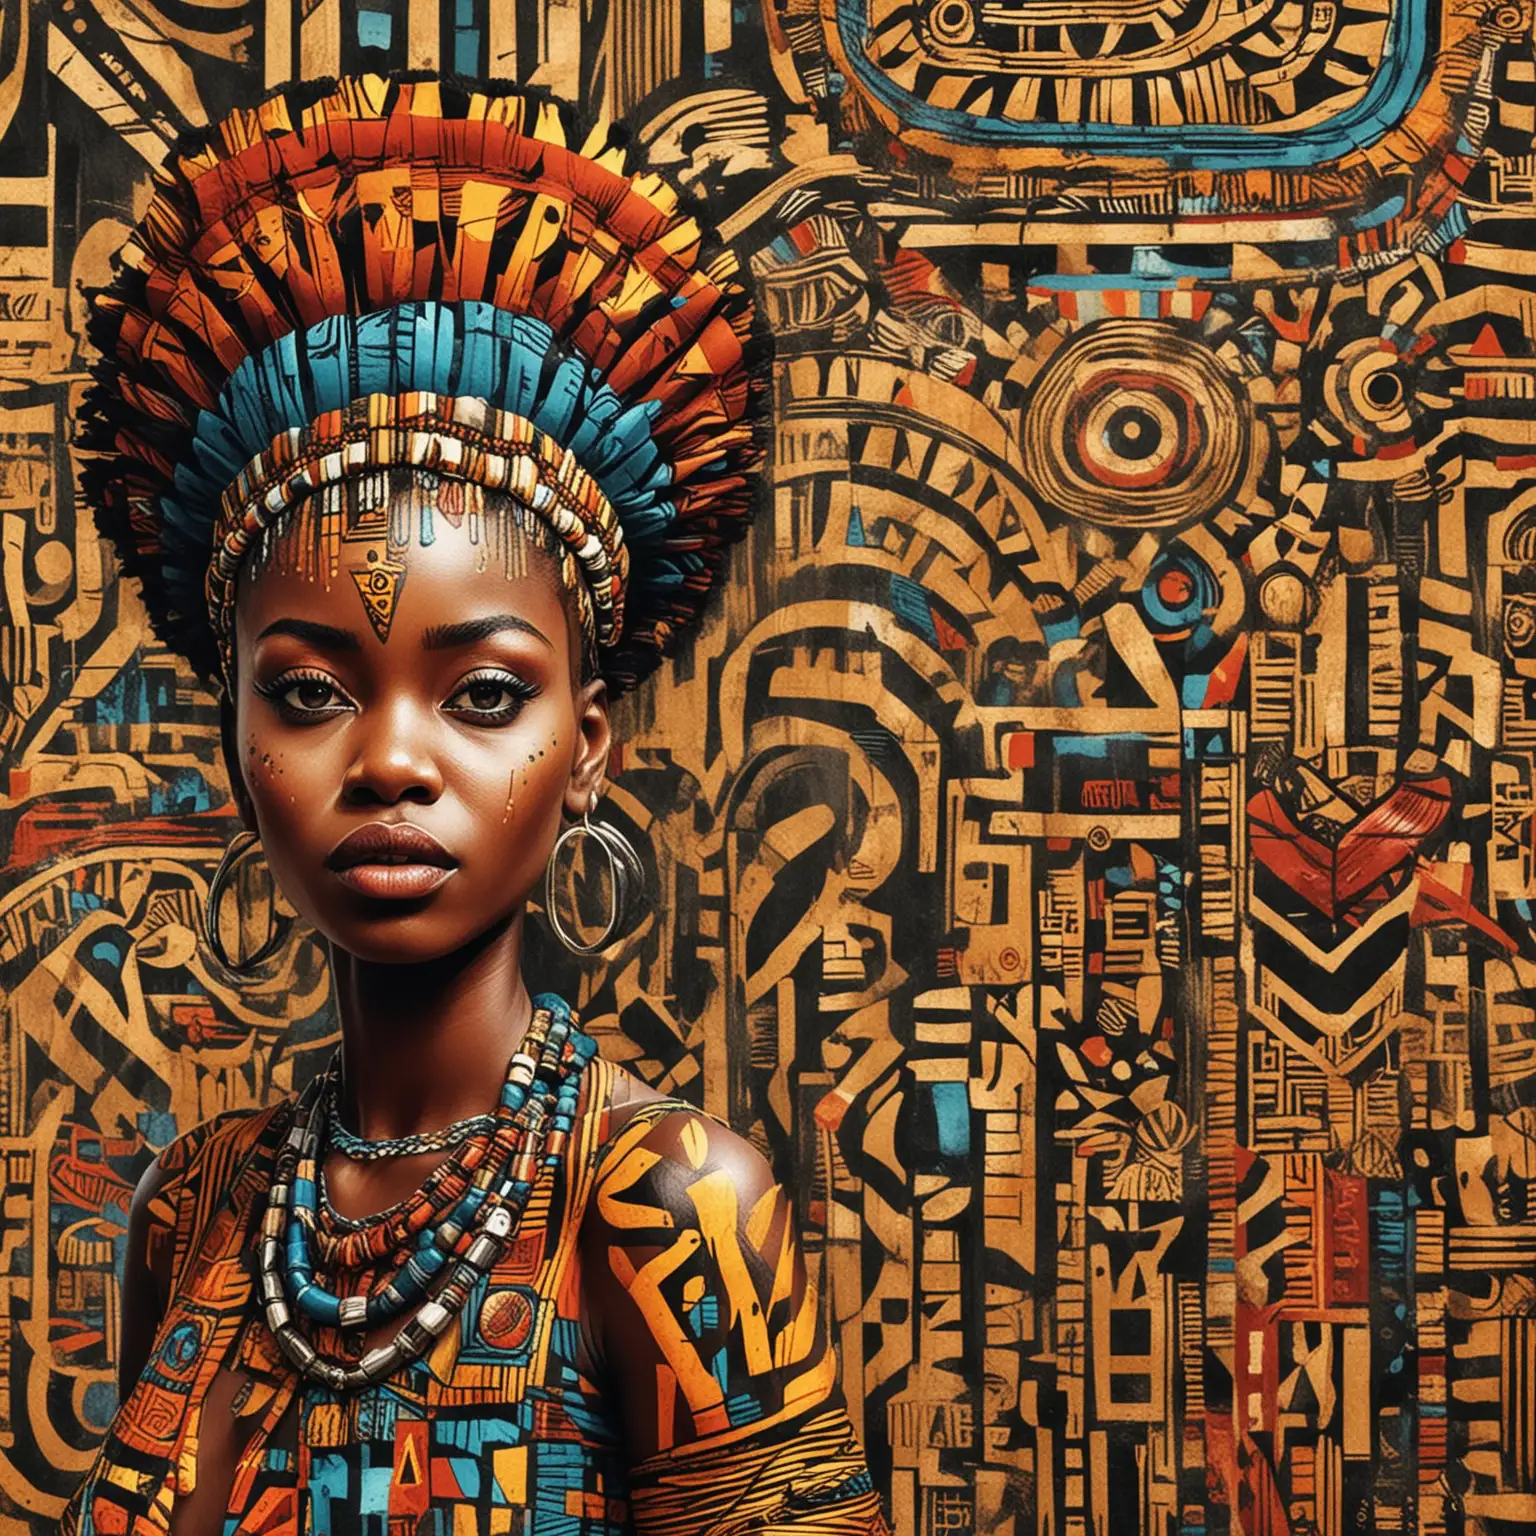 Urban African Street Art Patterns Vibrant Designs from Johannesburg Lagos and Nairobi